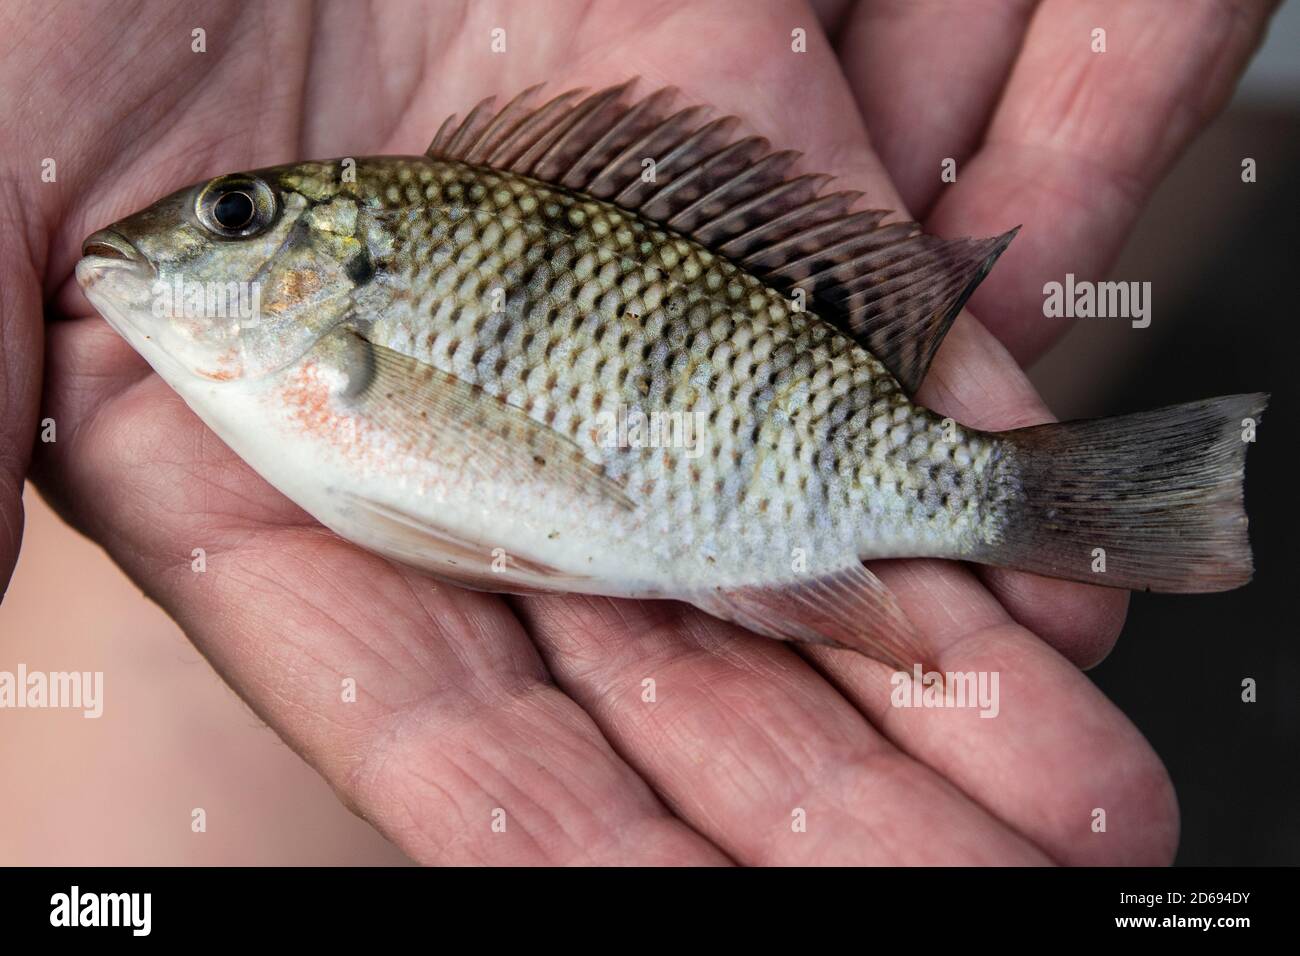 Small bream- like fish caught in woven fish trap from the Okavango River. Stock Photo